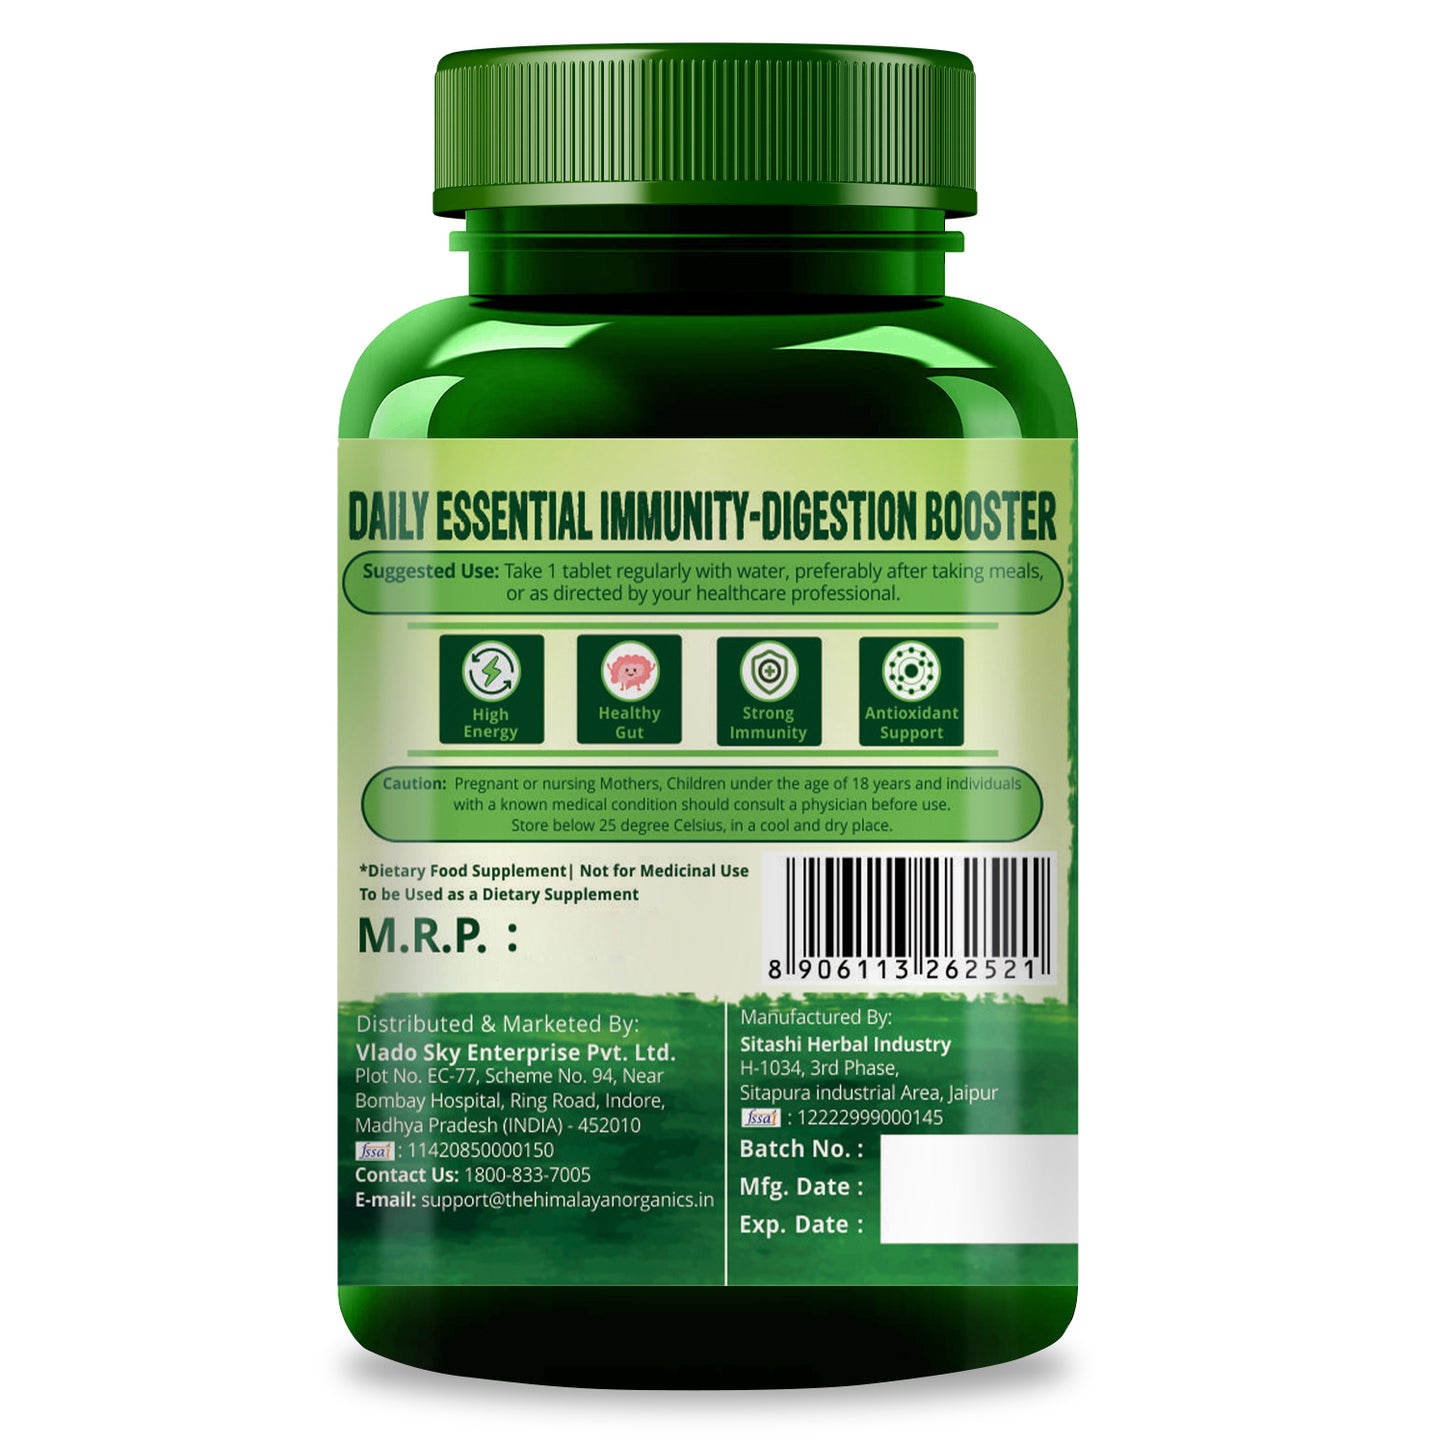 Himalayan Organics Immunity Multivitamin with Probiotics with Vitamin C, D, K2, Zinc, Ginseng, Giloy, Biotin For Men & Women - 180 Veg Tablets